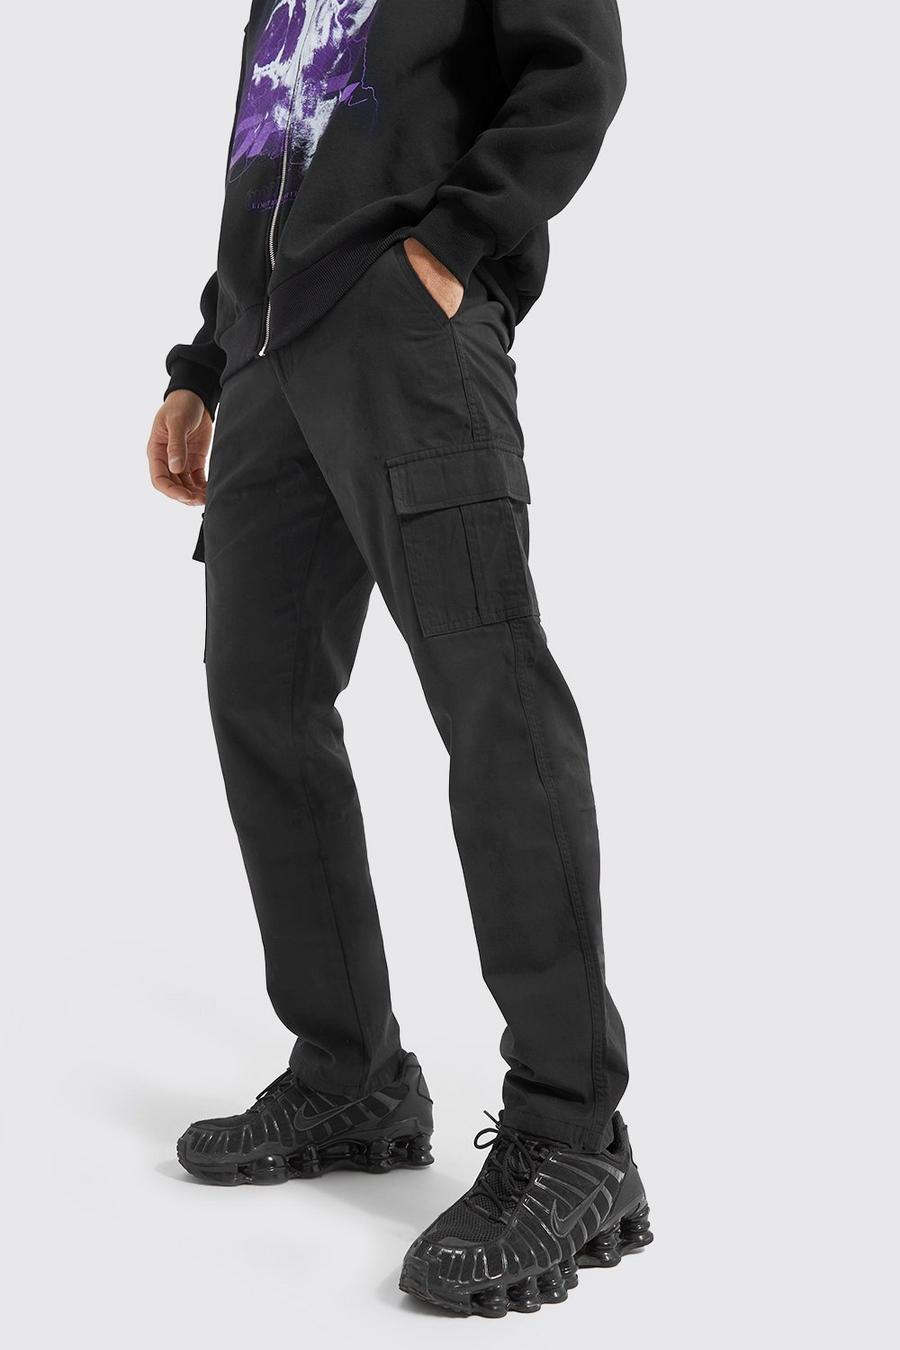 Black nero מכנסי דגמ'ח טוויל בגזרה ישרה